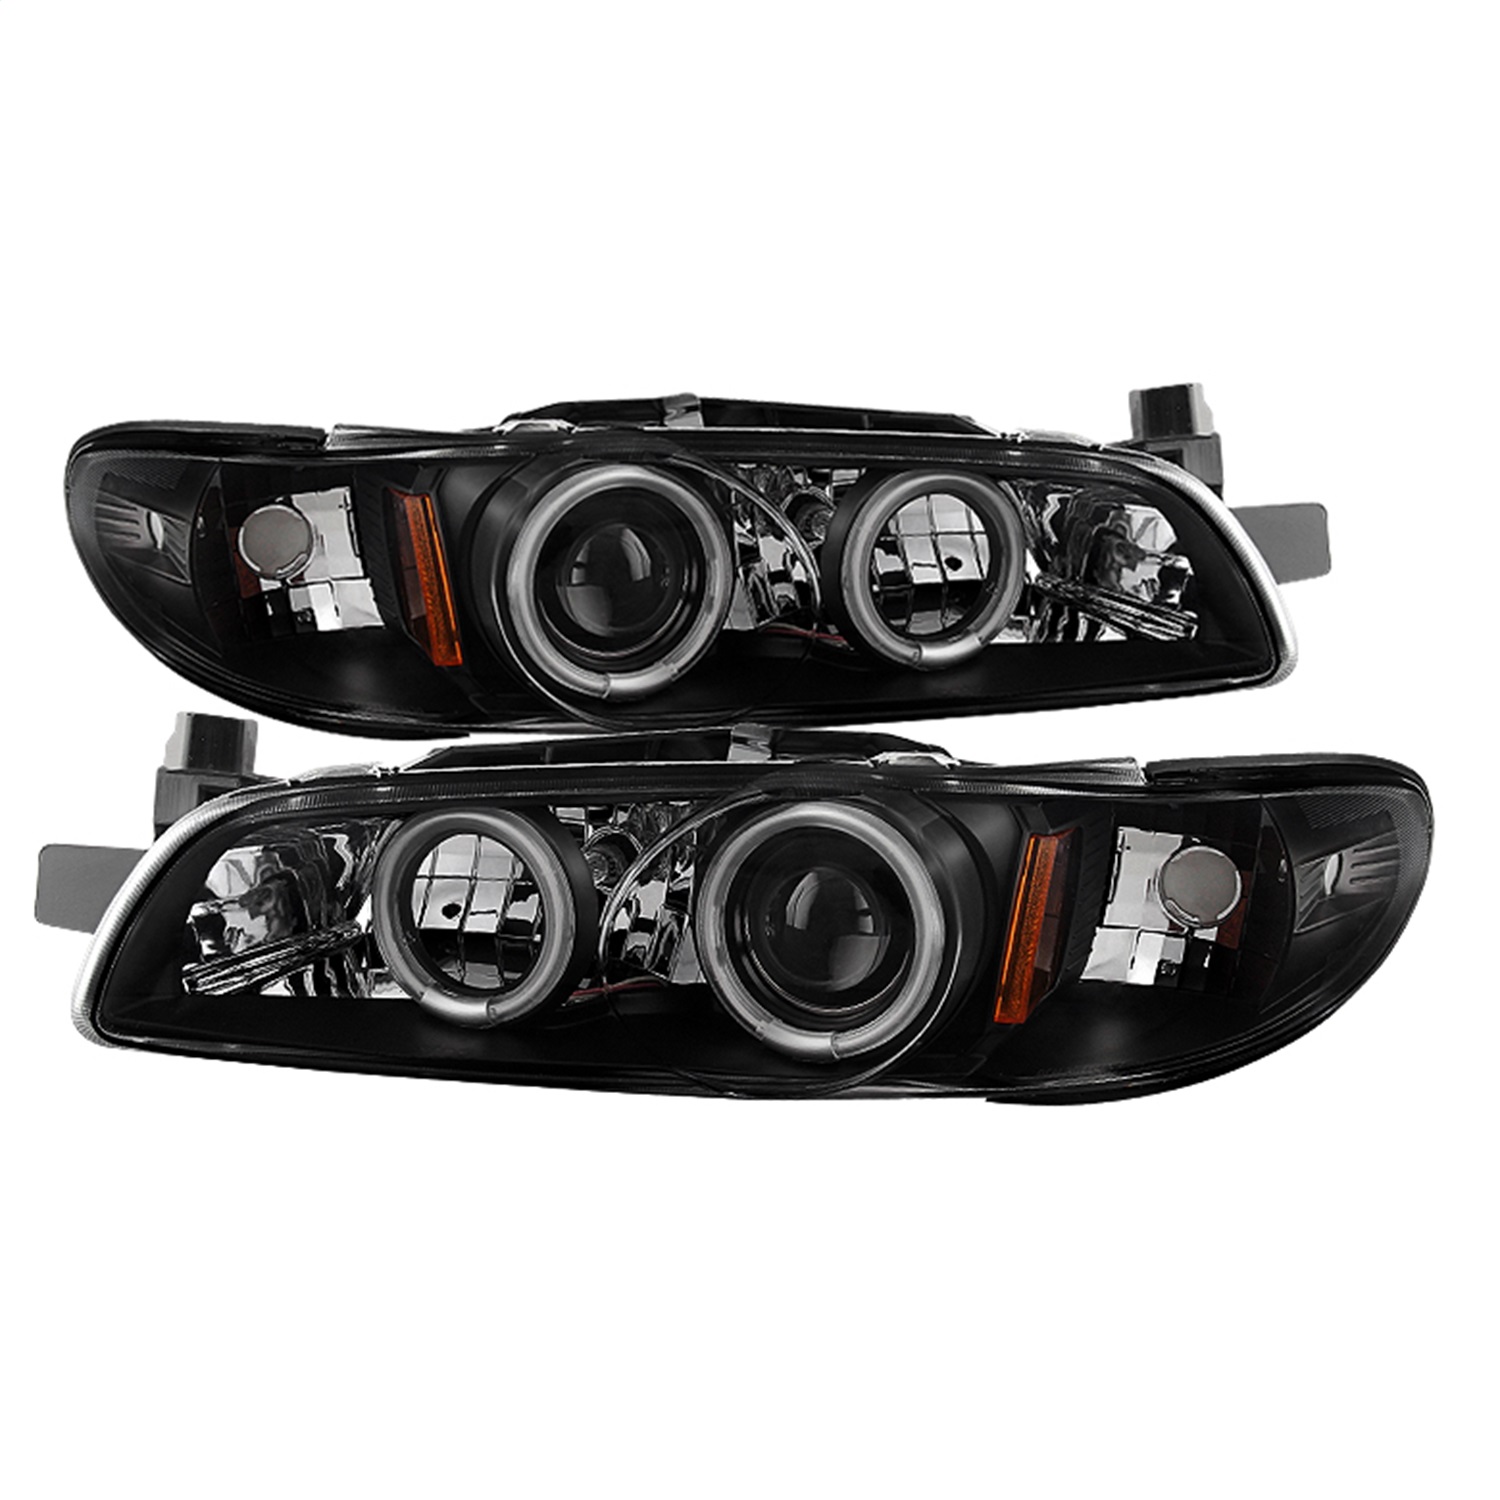 Spyder Auto 5011695 CCFL Halo Projector Headlights Fits 97-03 Grand Prix